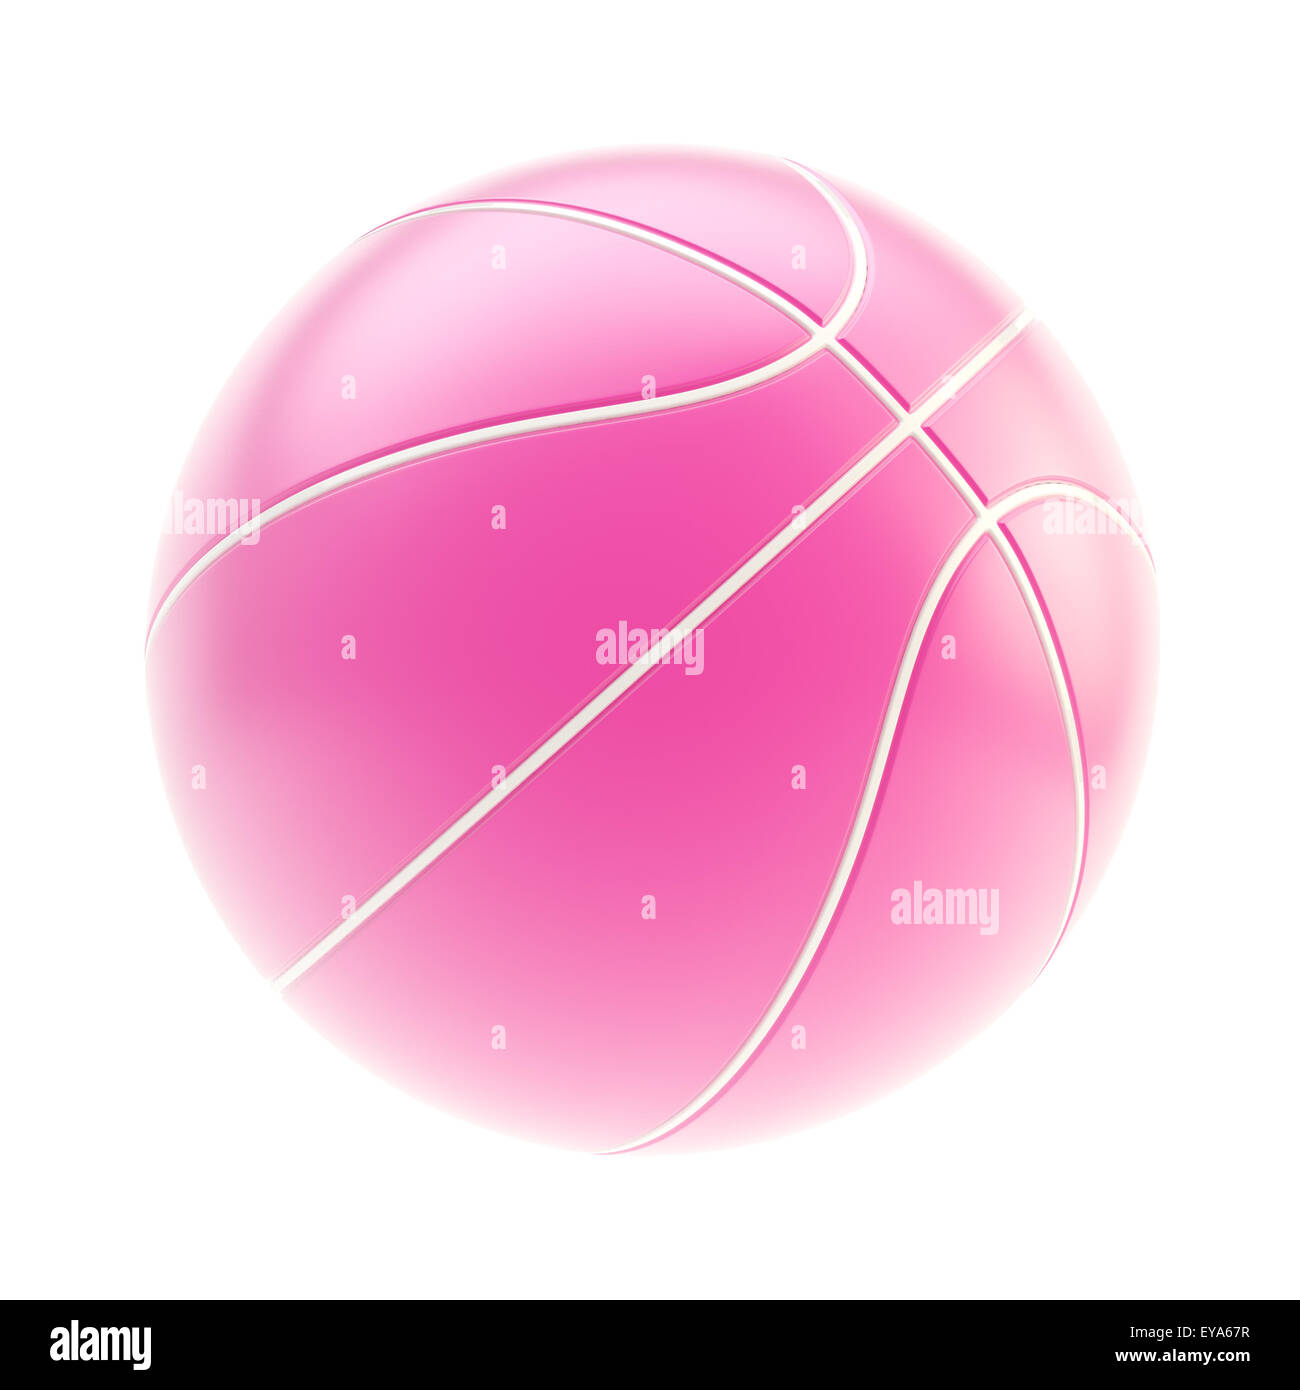 Basketball ball render isolated Stock Photo - Alamy